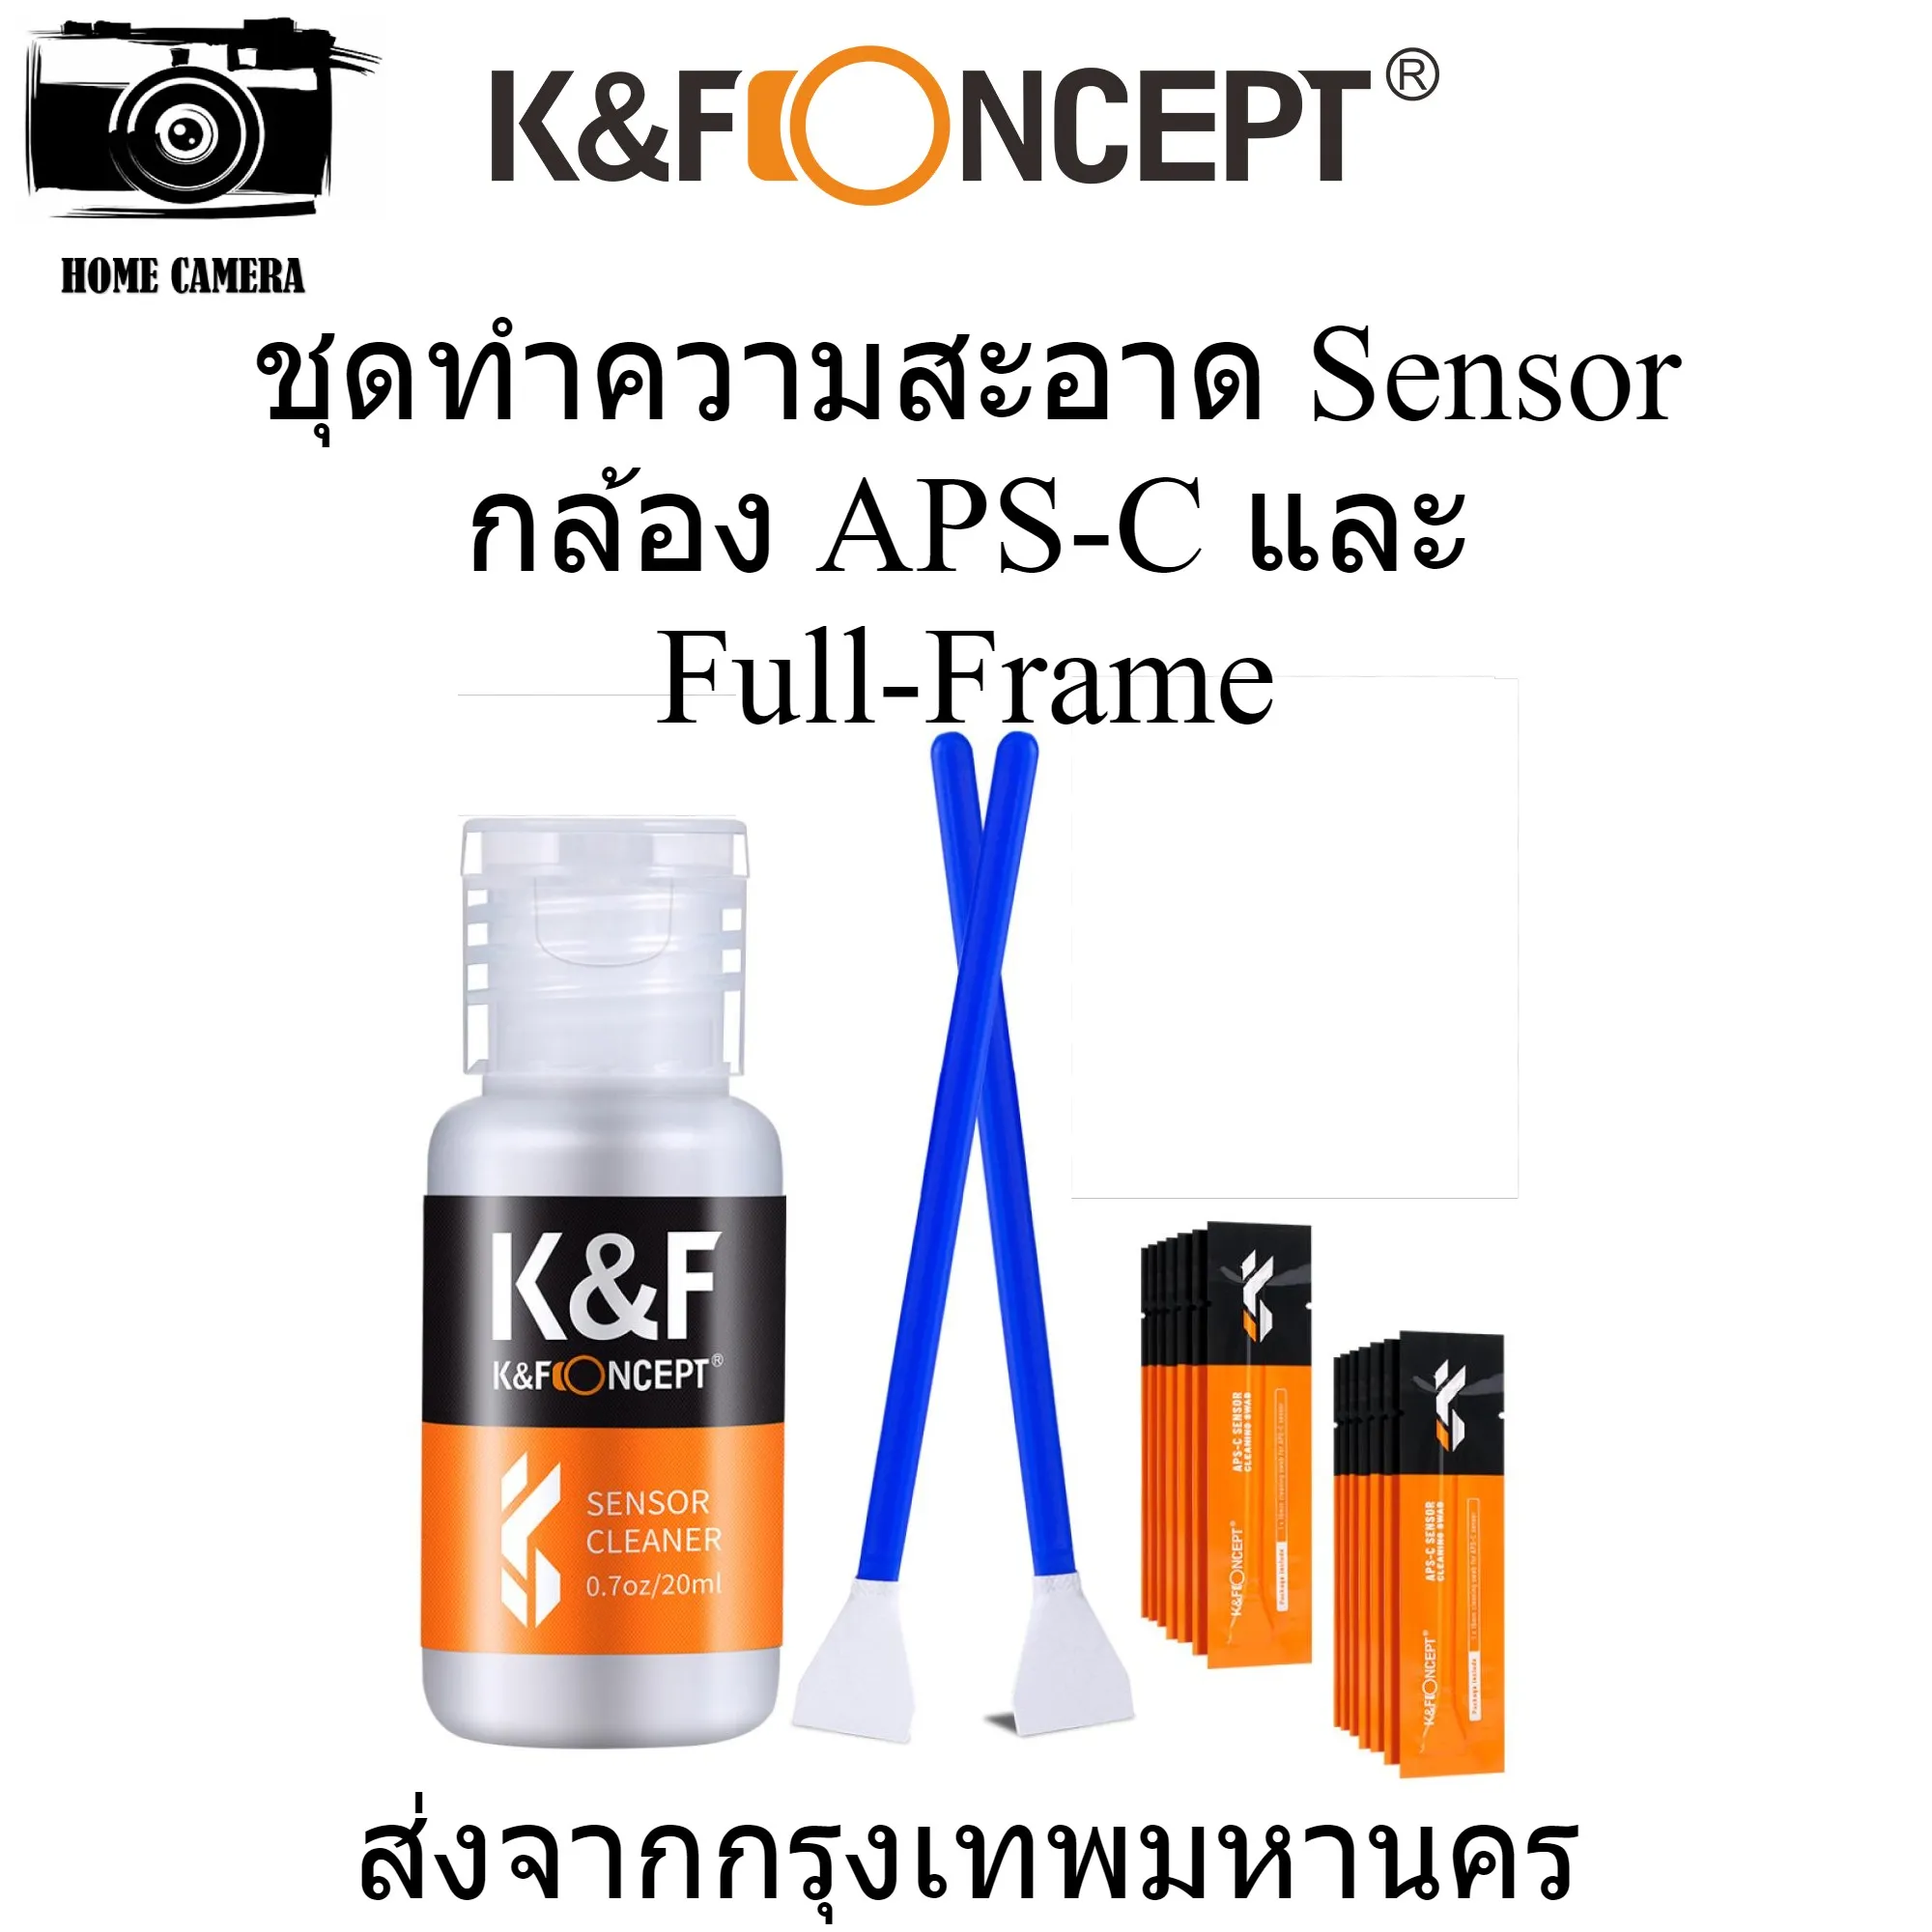 K&F ชุดทำความสะอาด Sensor กล้อง APS-C และ Full-Frame ส่งจากกรุงเทพ